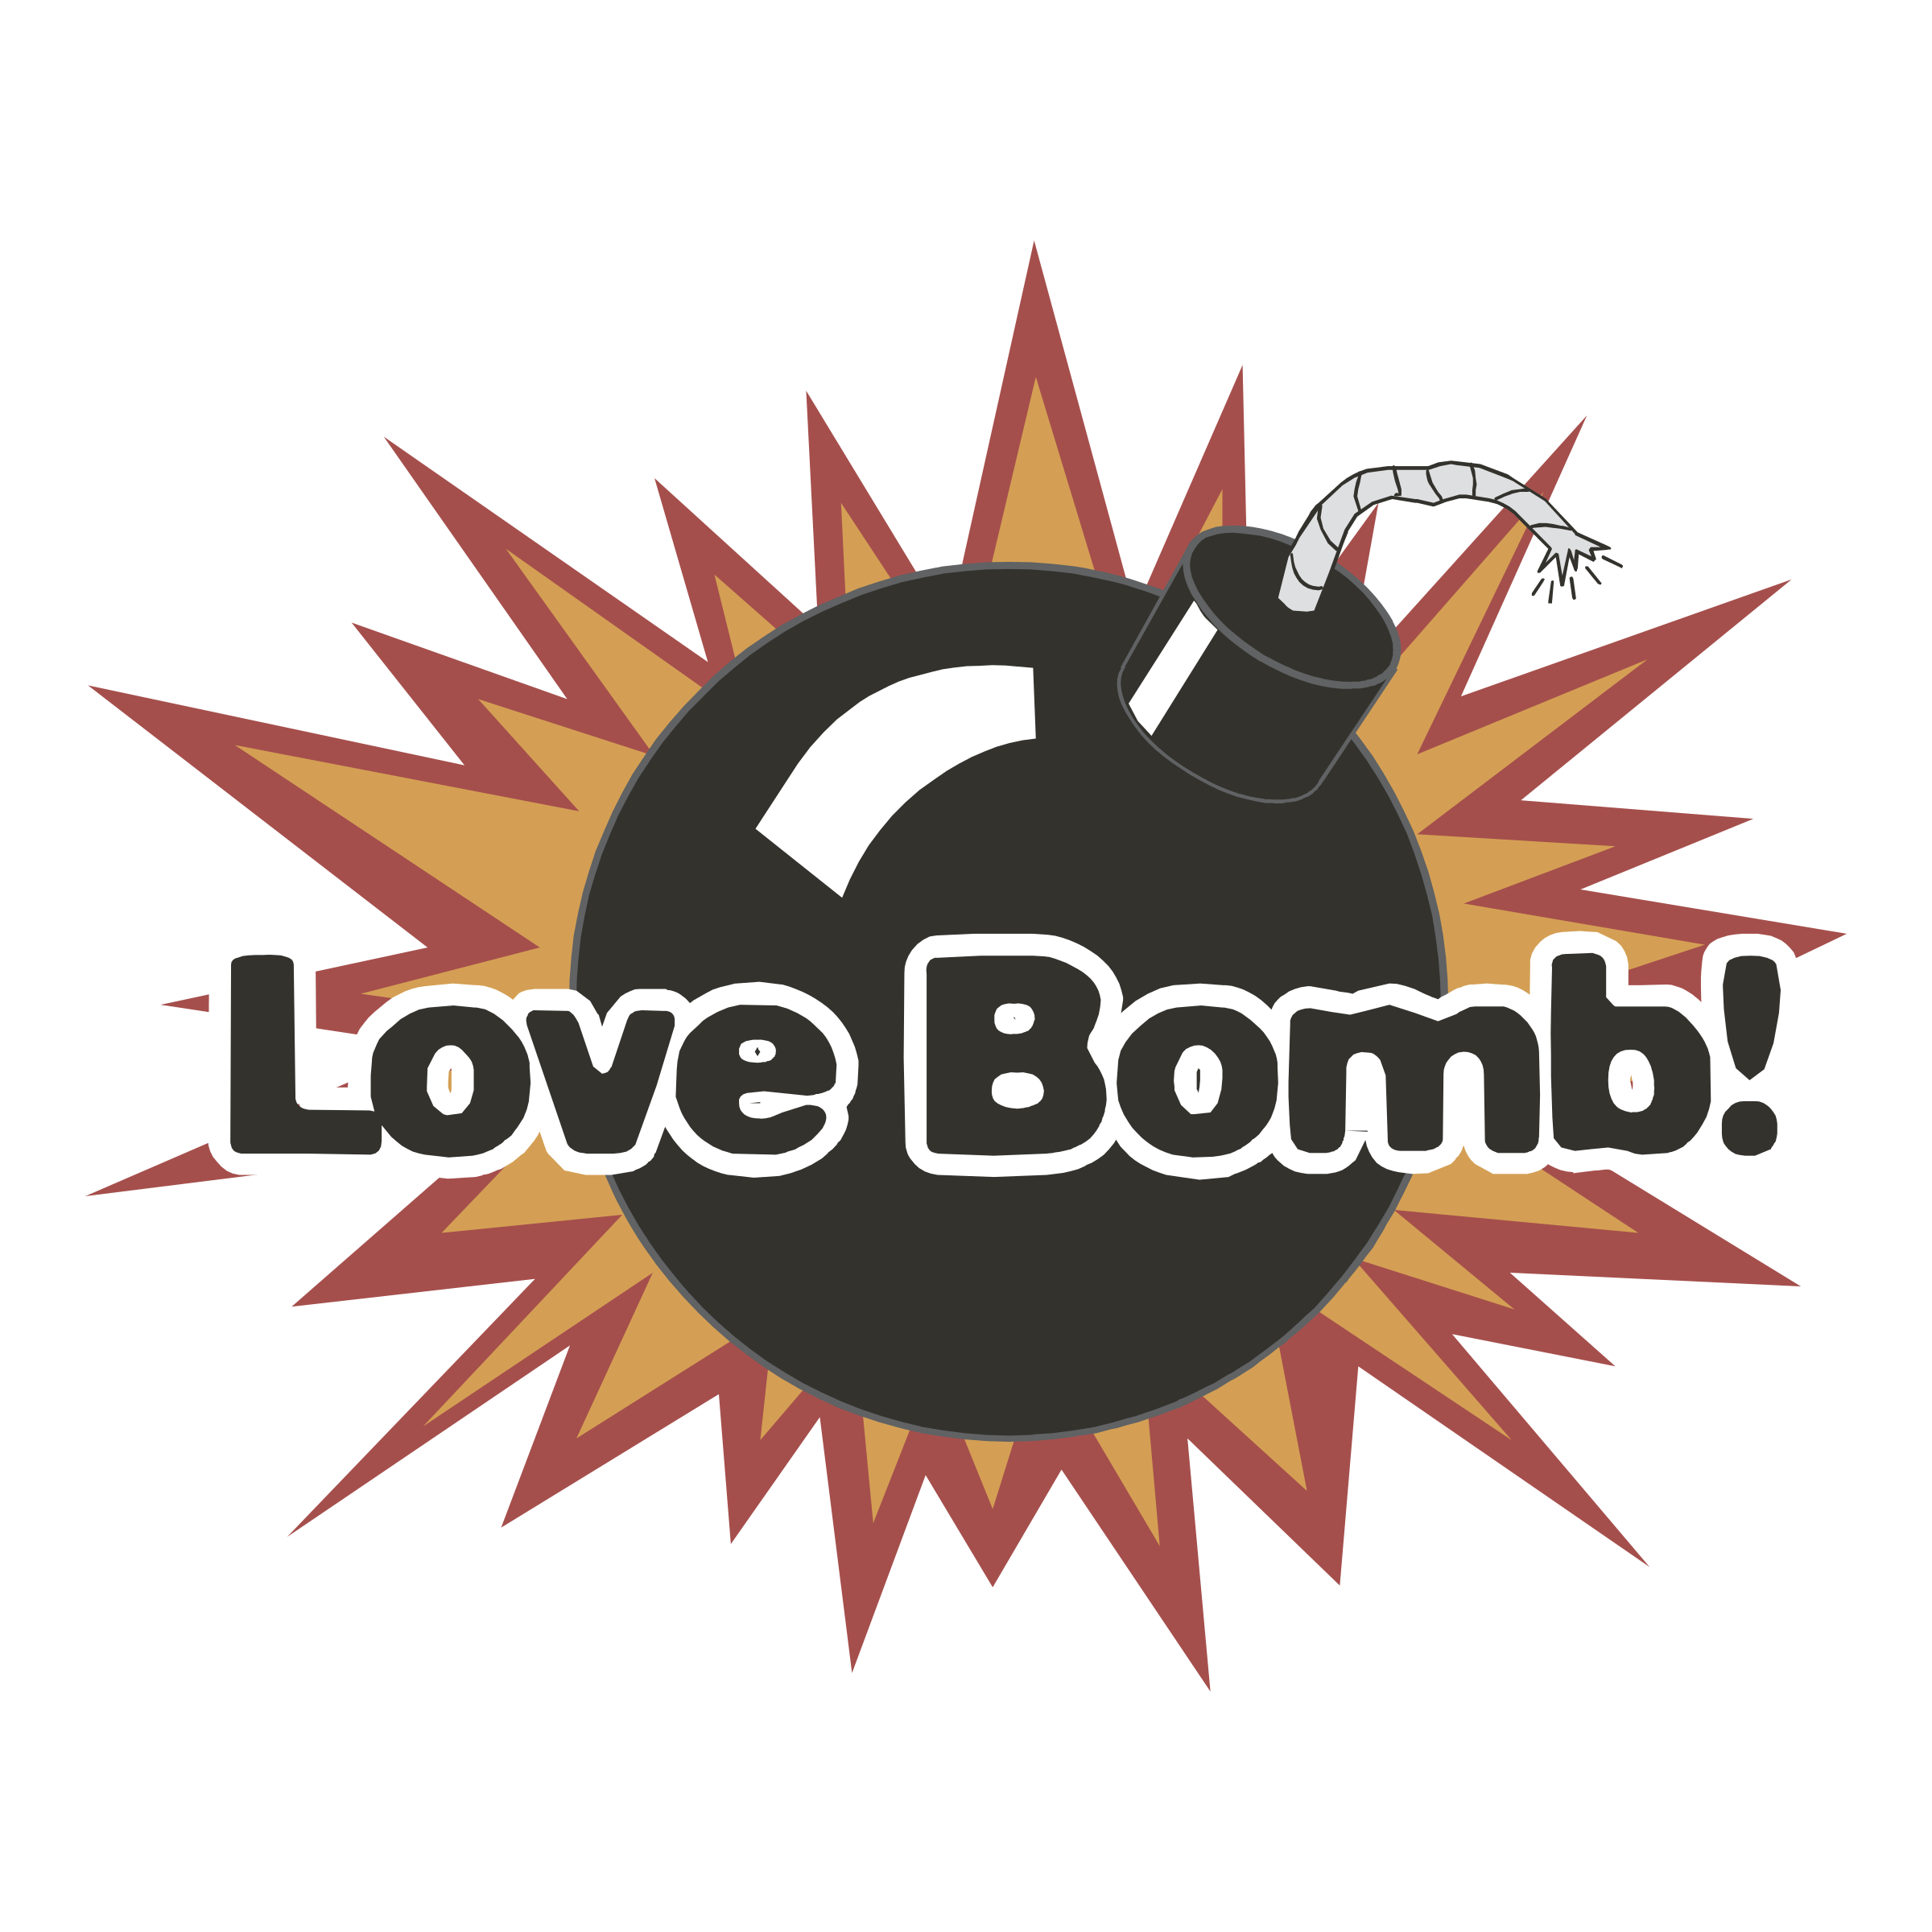 Bomb Logo - Love Bomb Logo PNG Transparent & SVG Vector - Freebie Supply